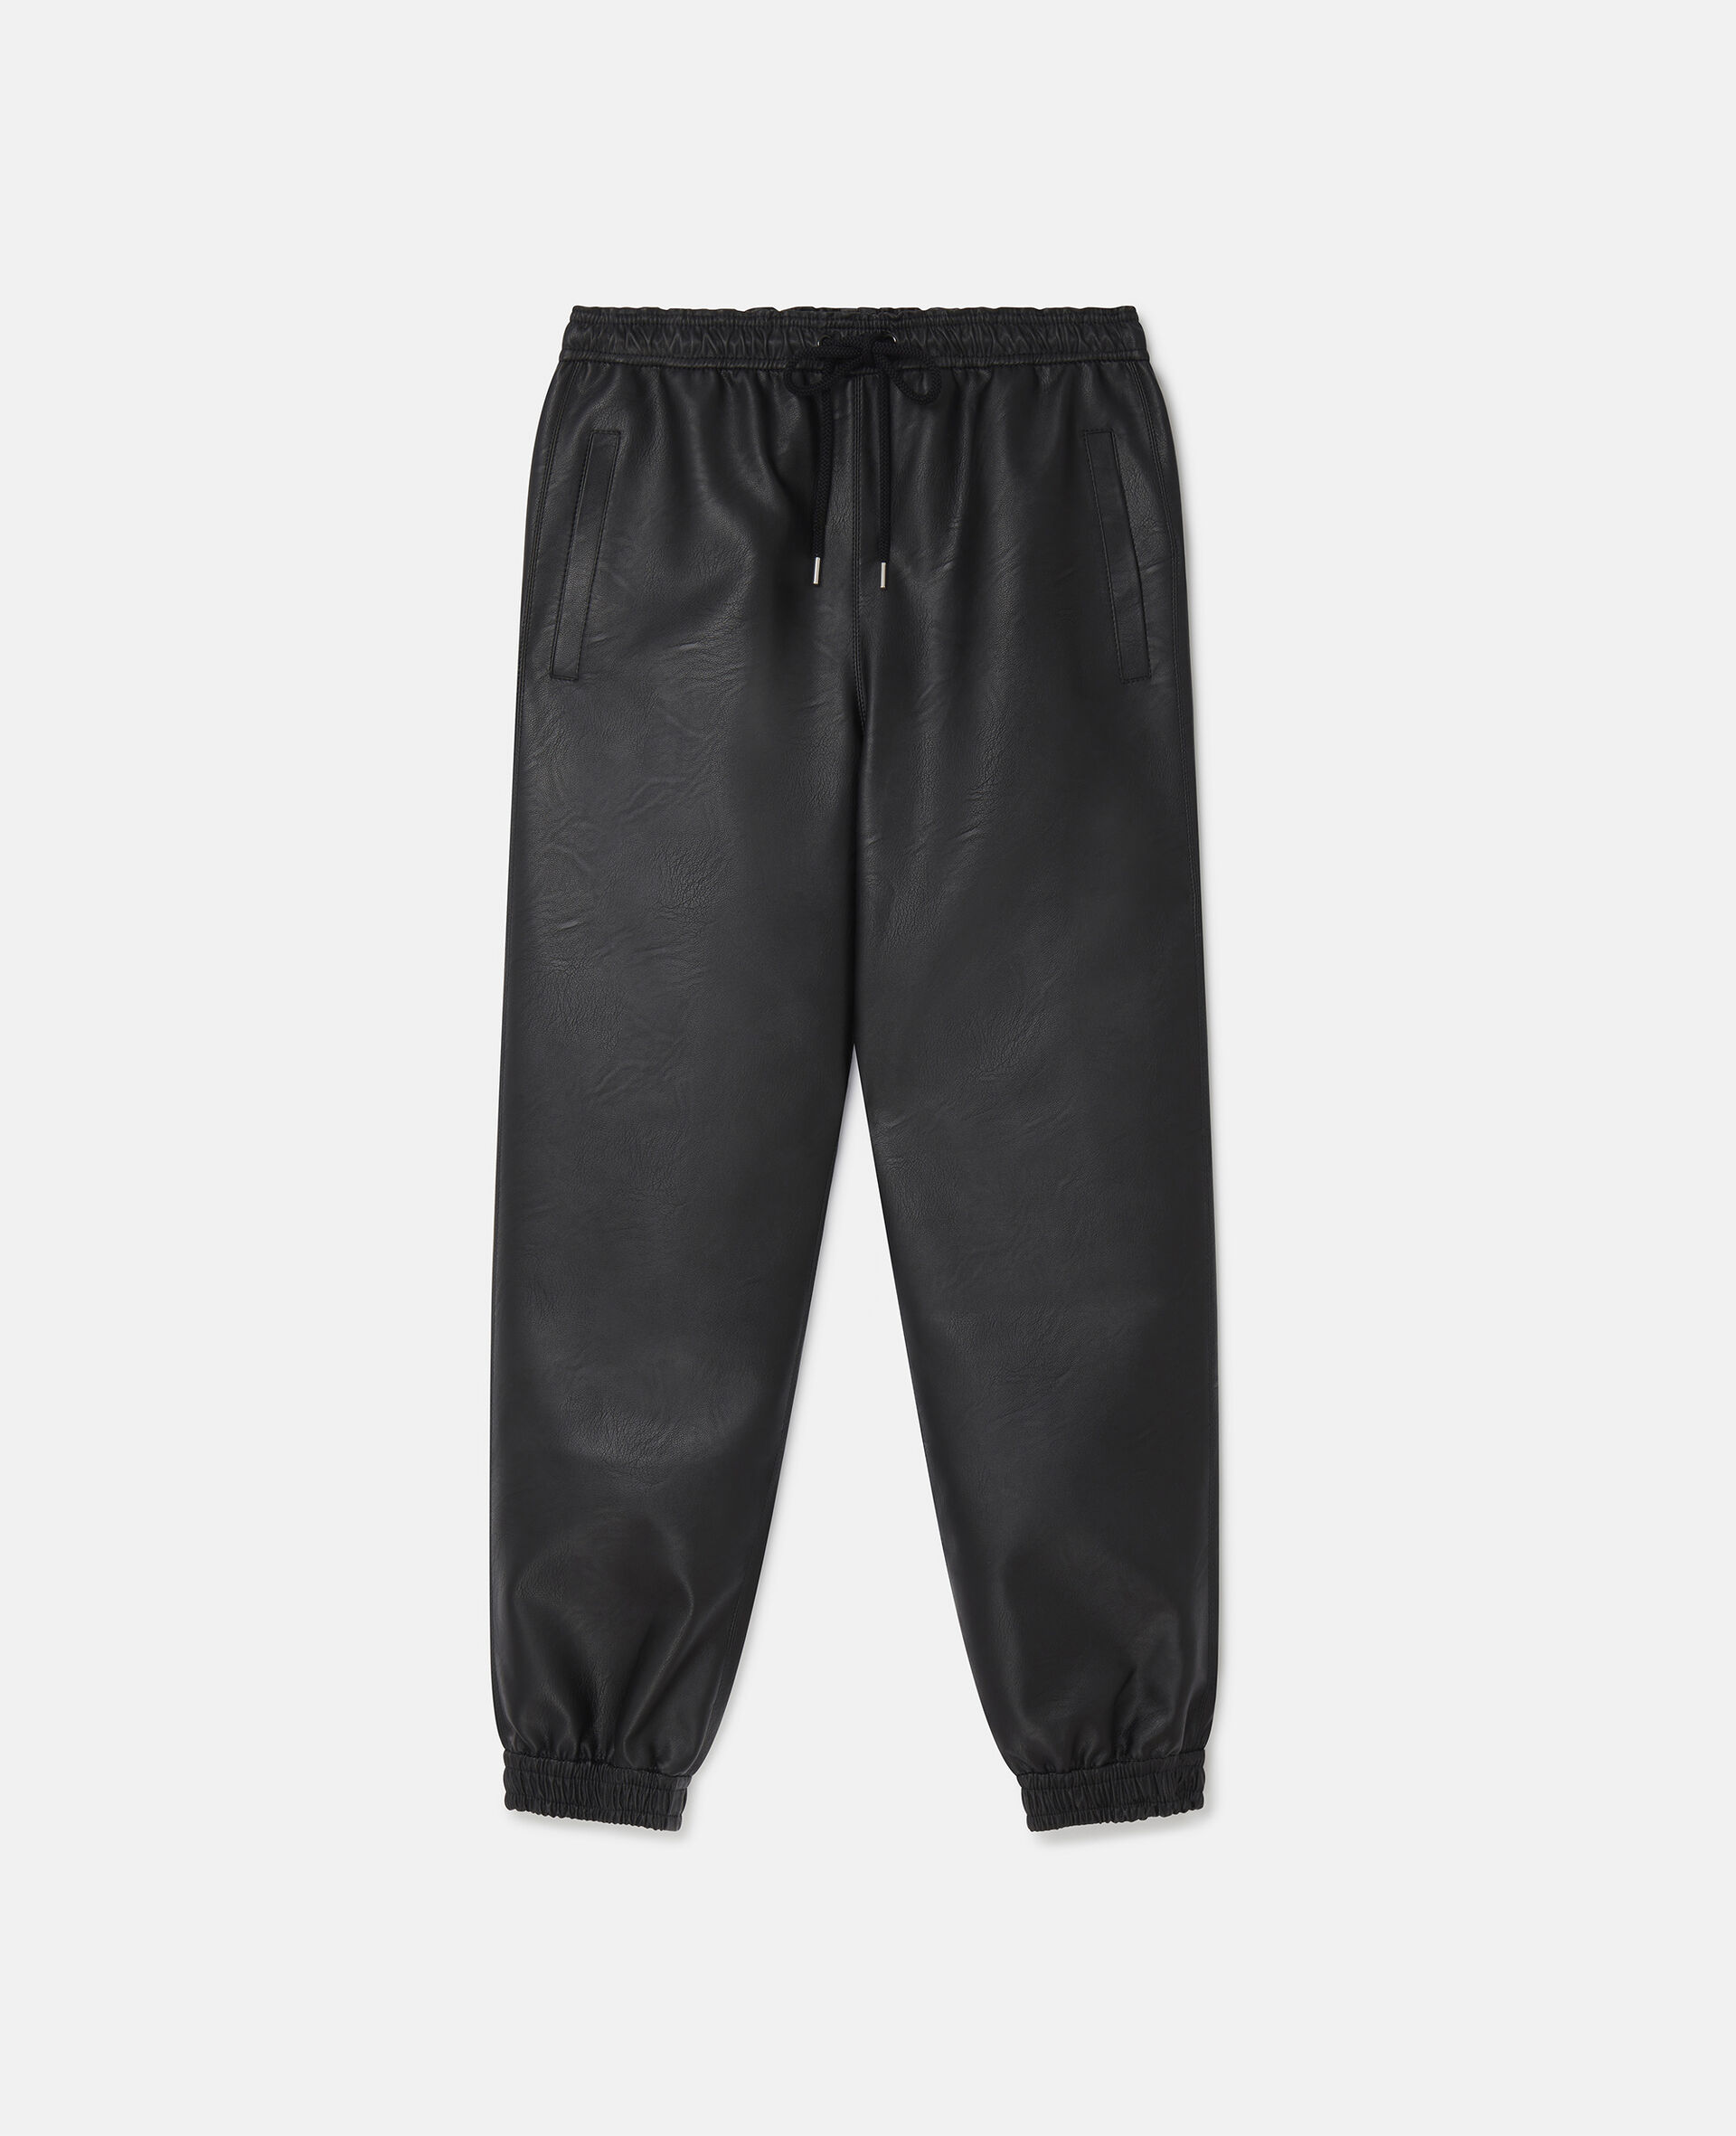 Alter Mat Trousers-Black-medium